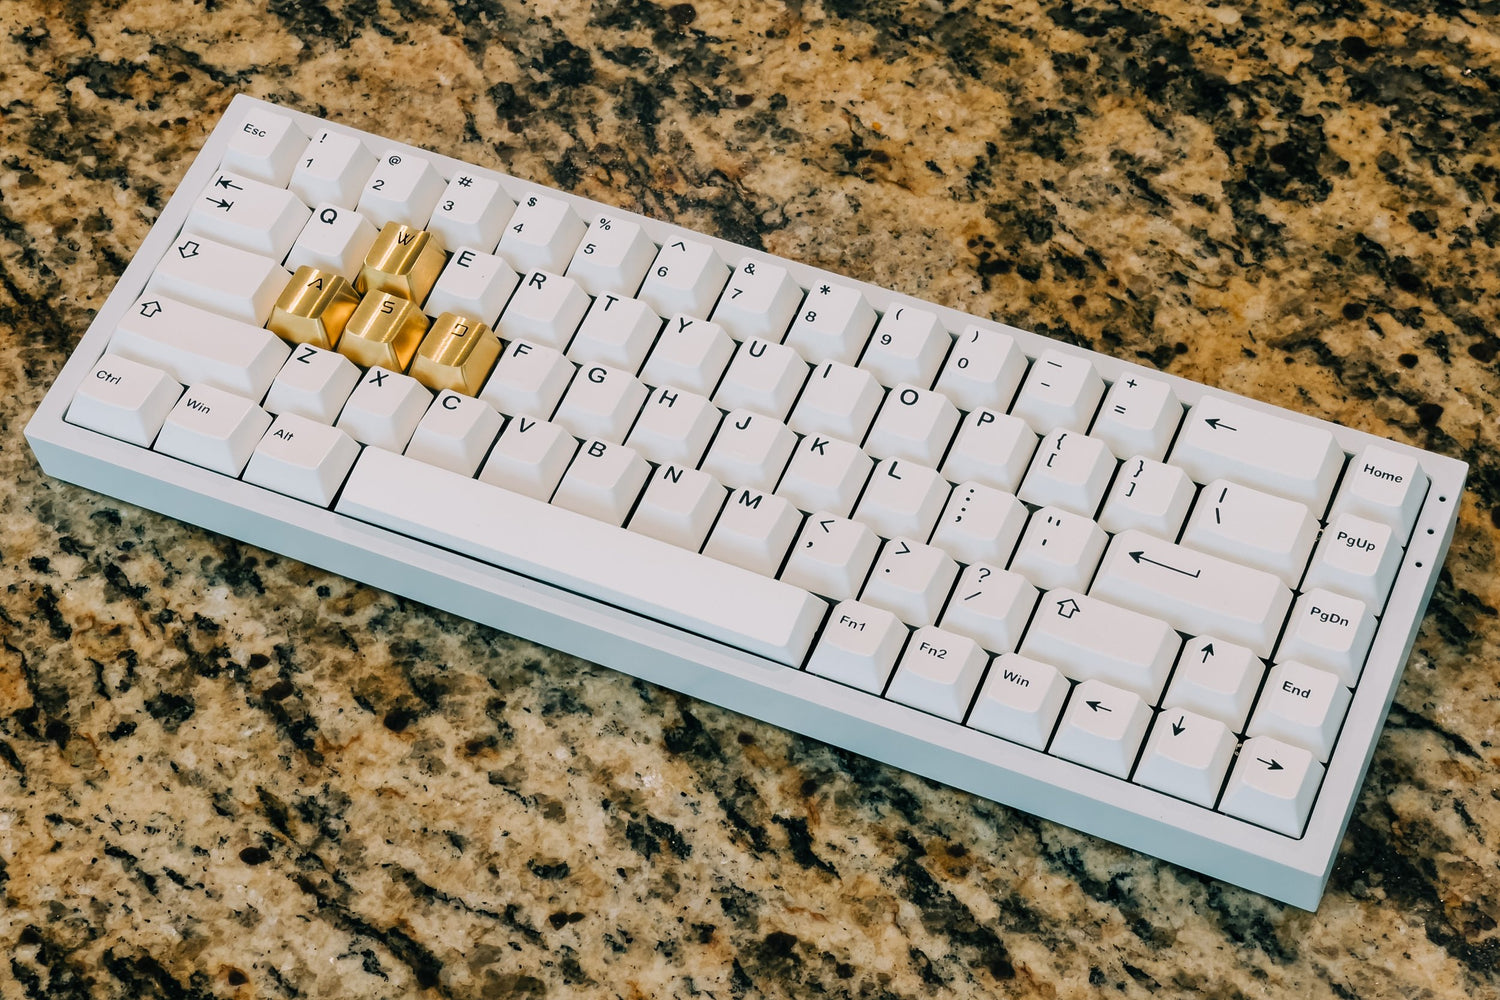 NK65 assembled keyboard.